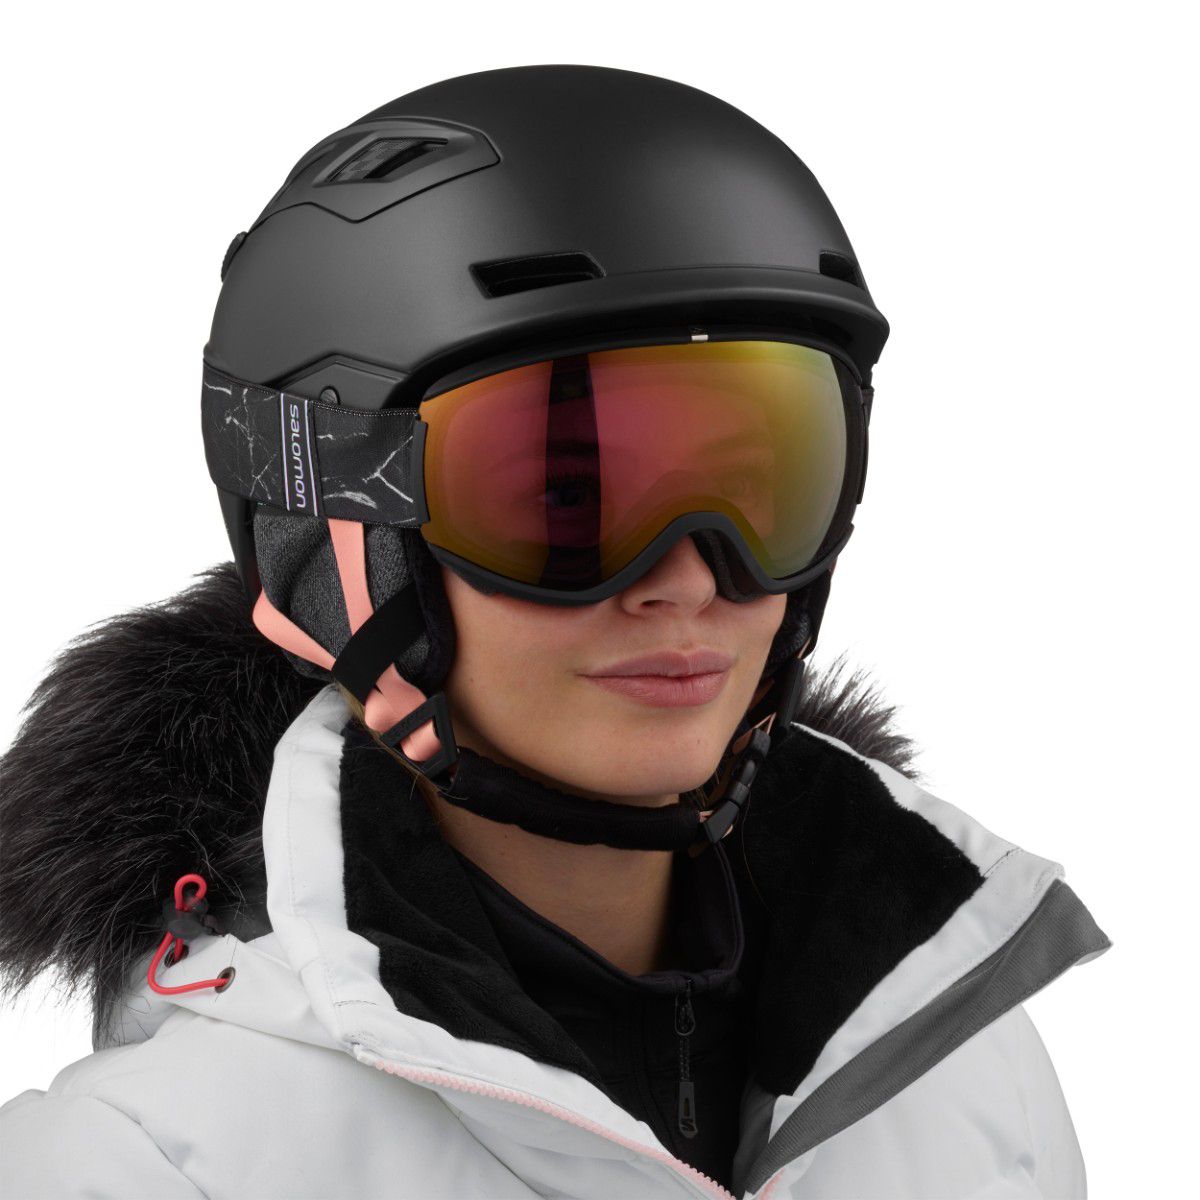 Salomon Womens Qst Charge Ski Helmet